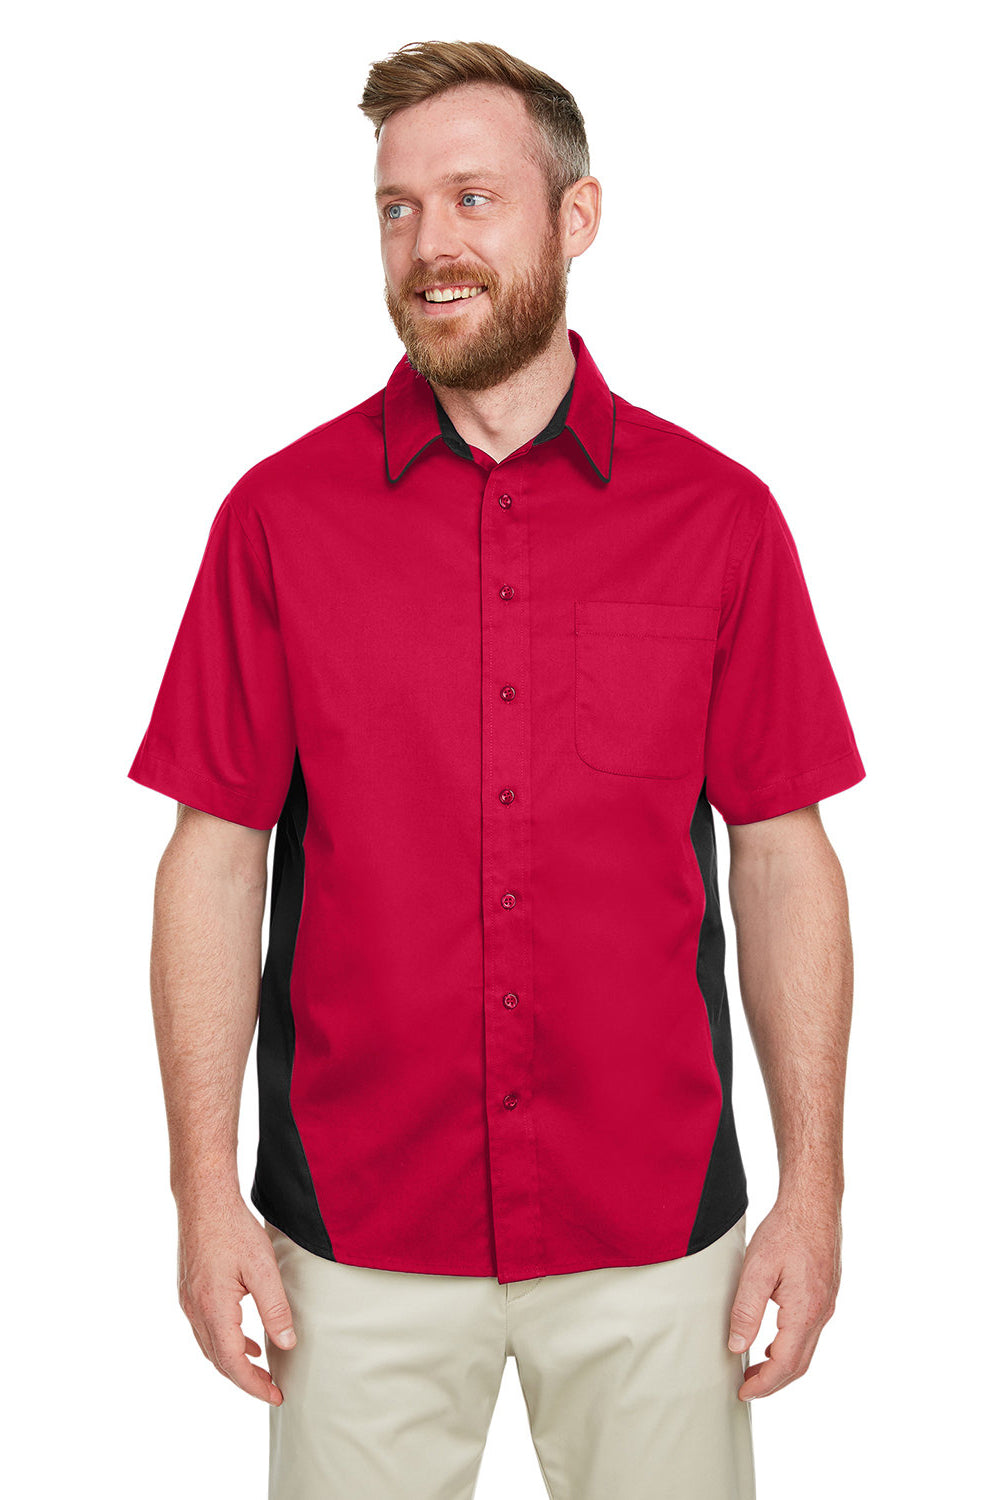 Harriton M586/M586T Mens Flash Colorblock Short Sleeve Button Down Shirt w/ Pocket Red/Black Front